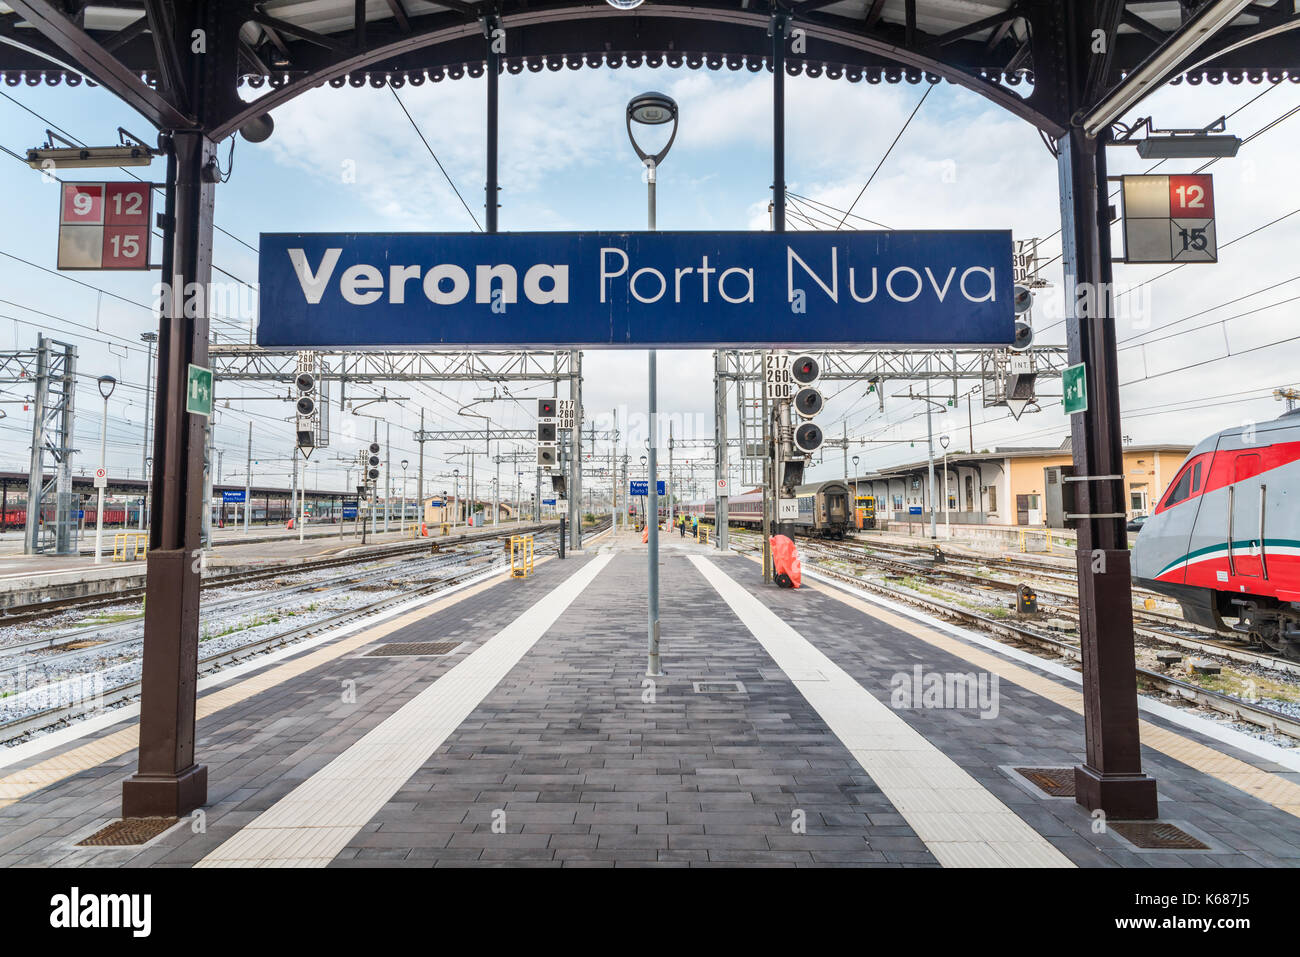 Verona porta nuova hi-res stock photography and images - Alamy